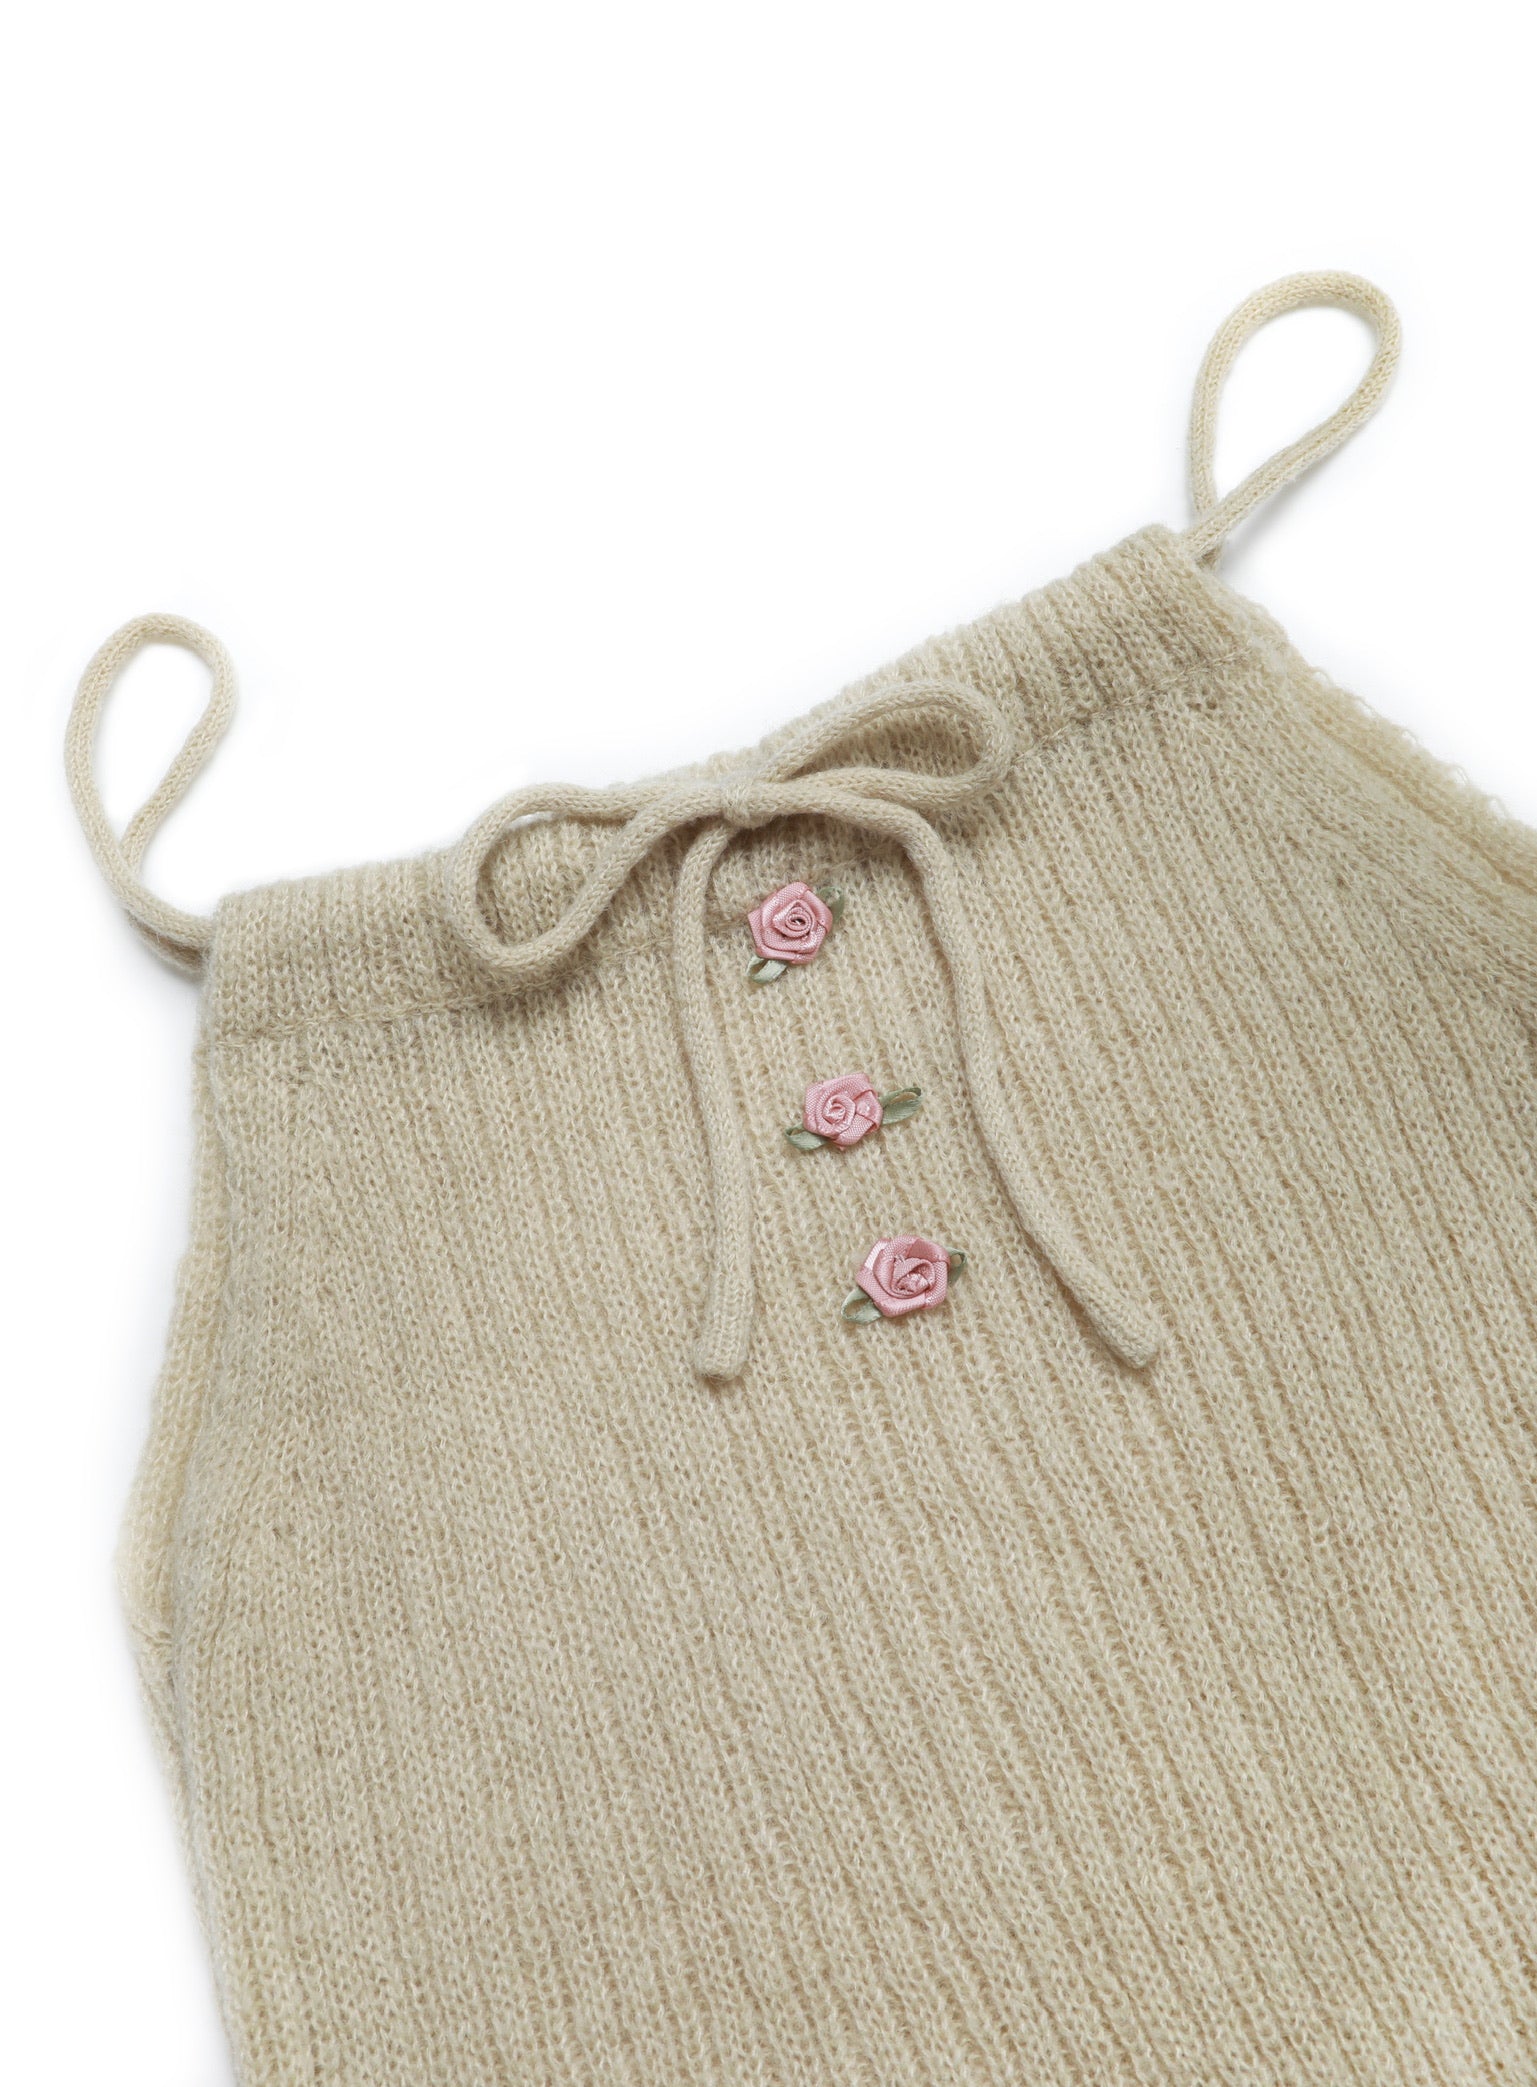 Retro Rose Knit Top & Cardigan Set